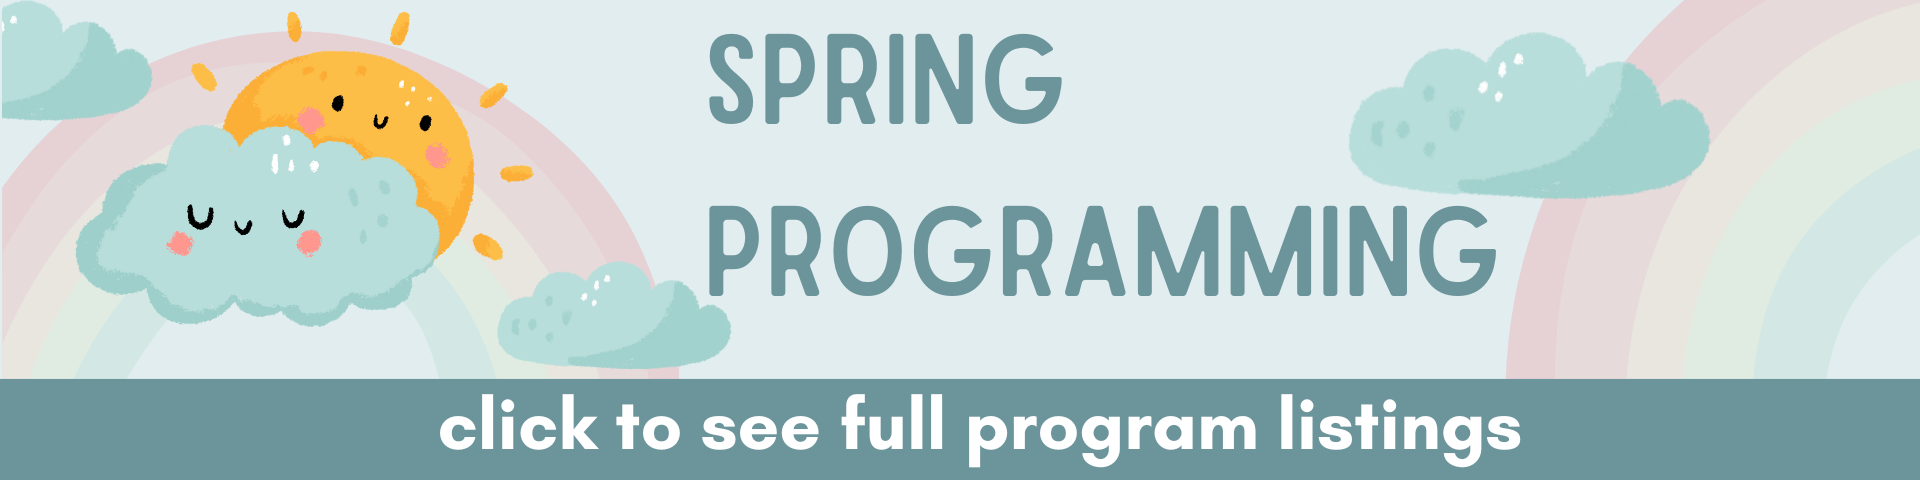 Spring Programming: Click to see full program listings 
